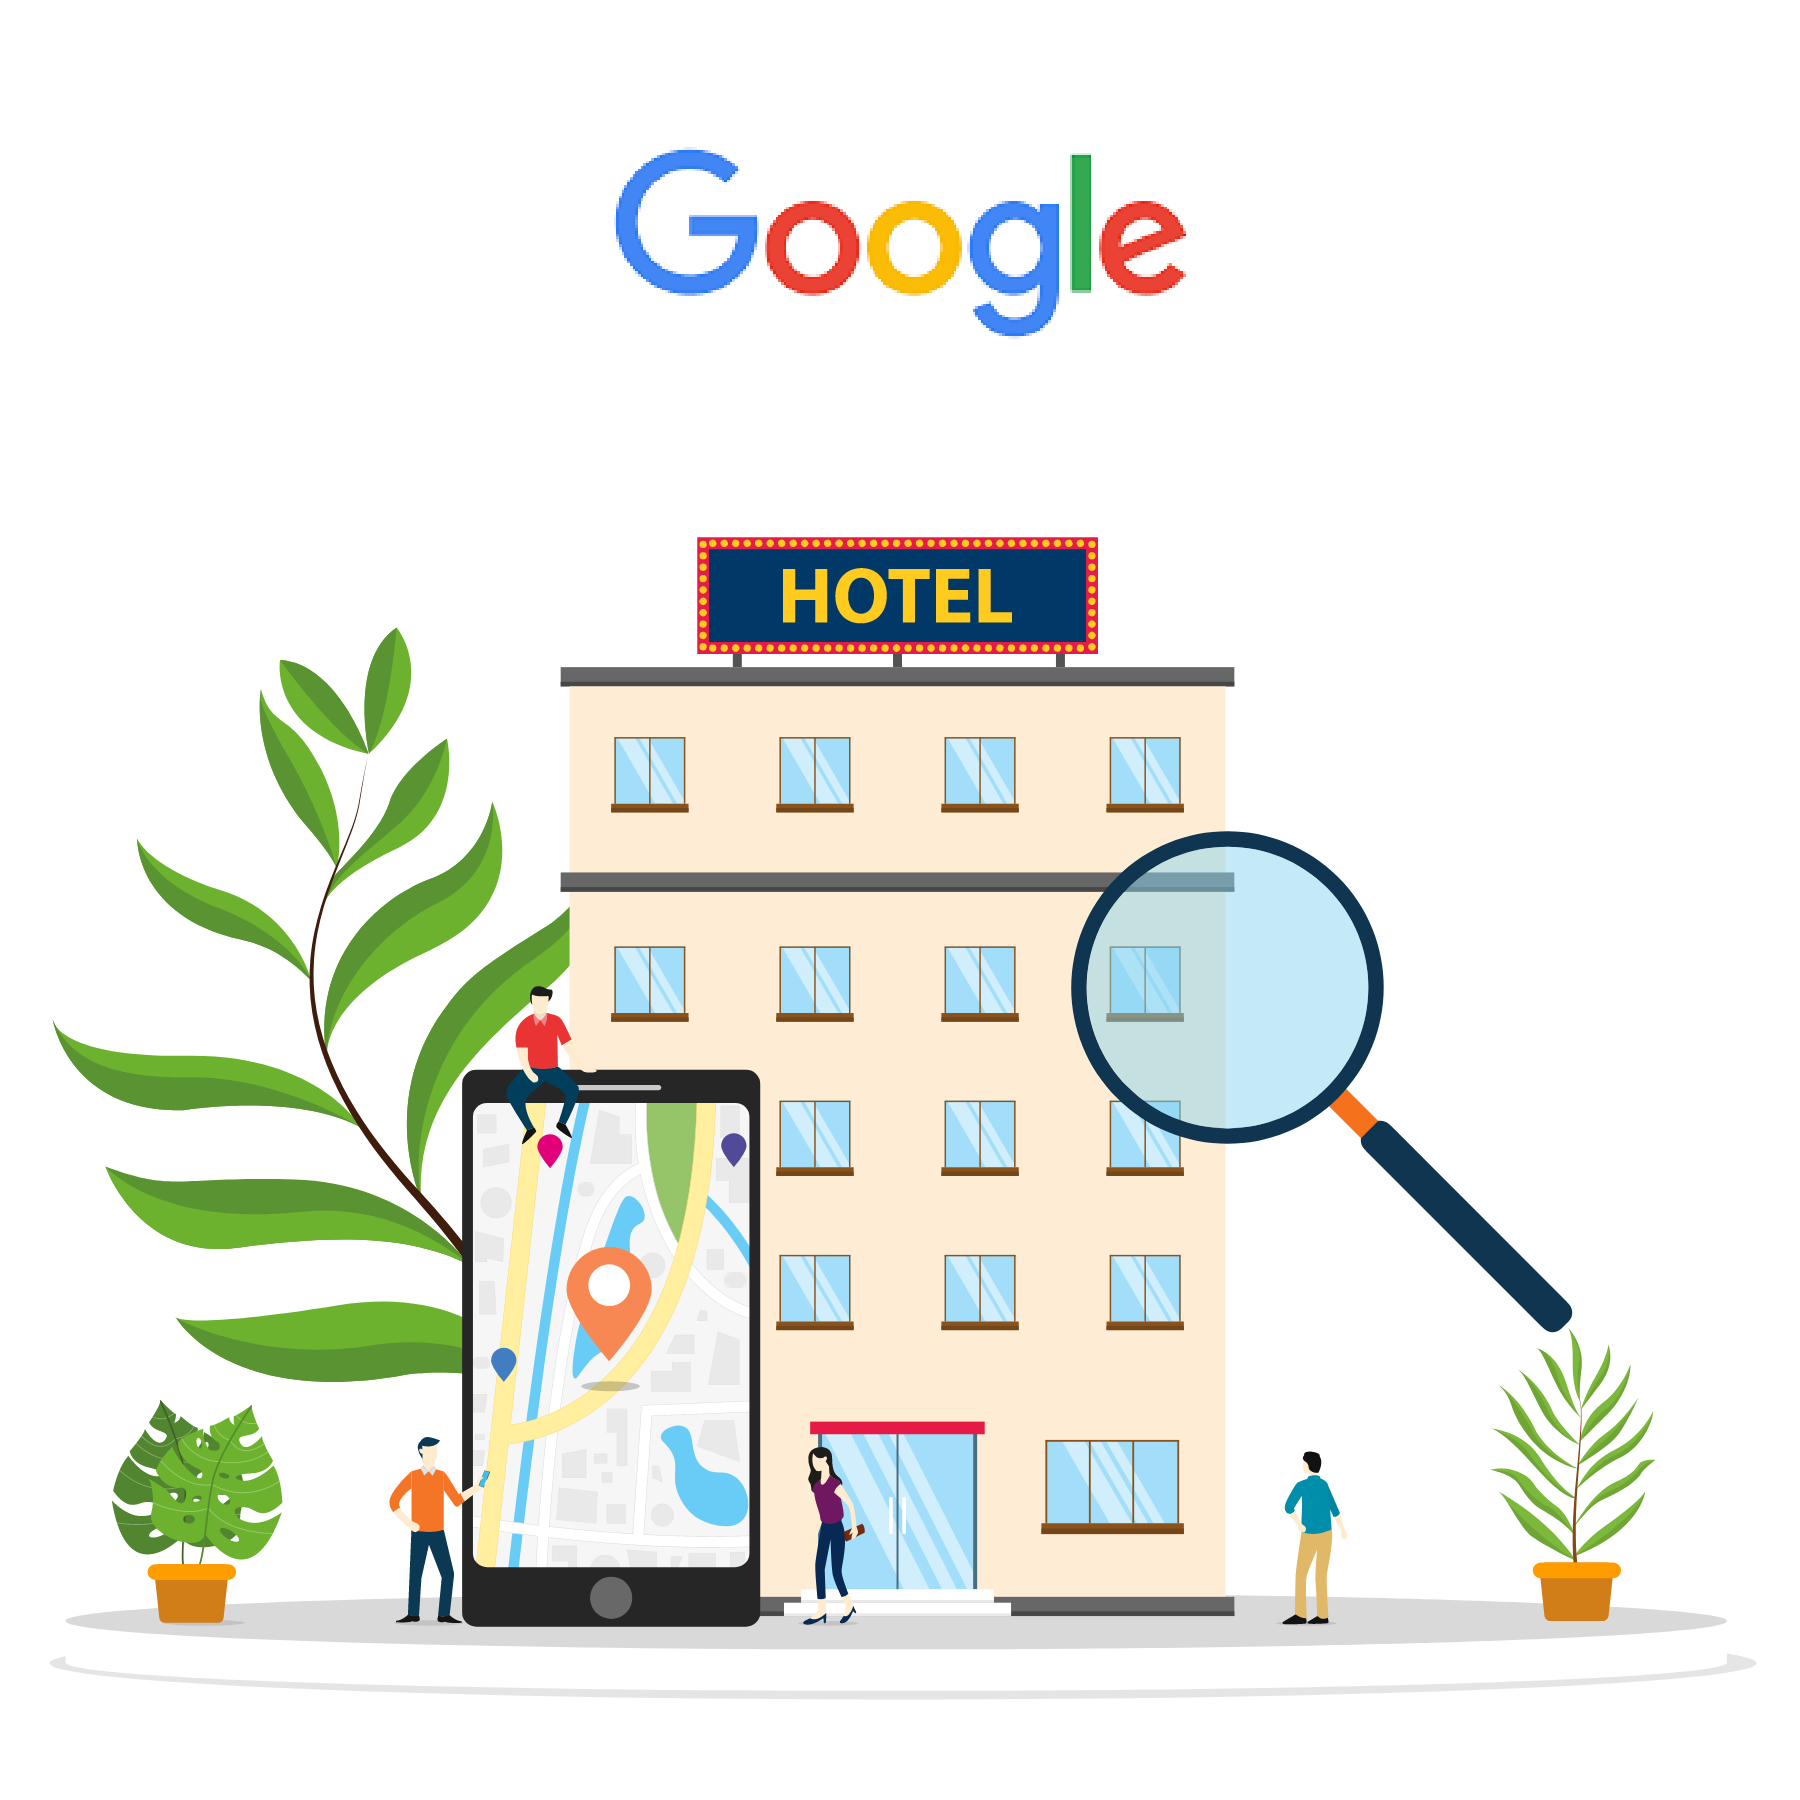 GoogleHotelAds-Hotel-Spider-OTAat2x.jpg